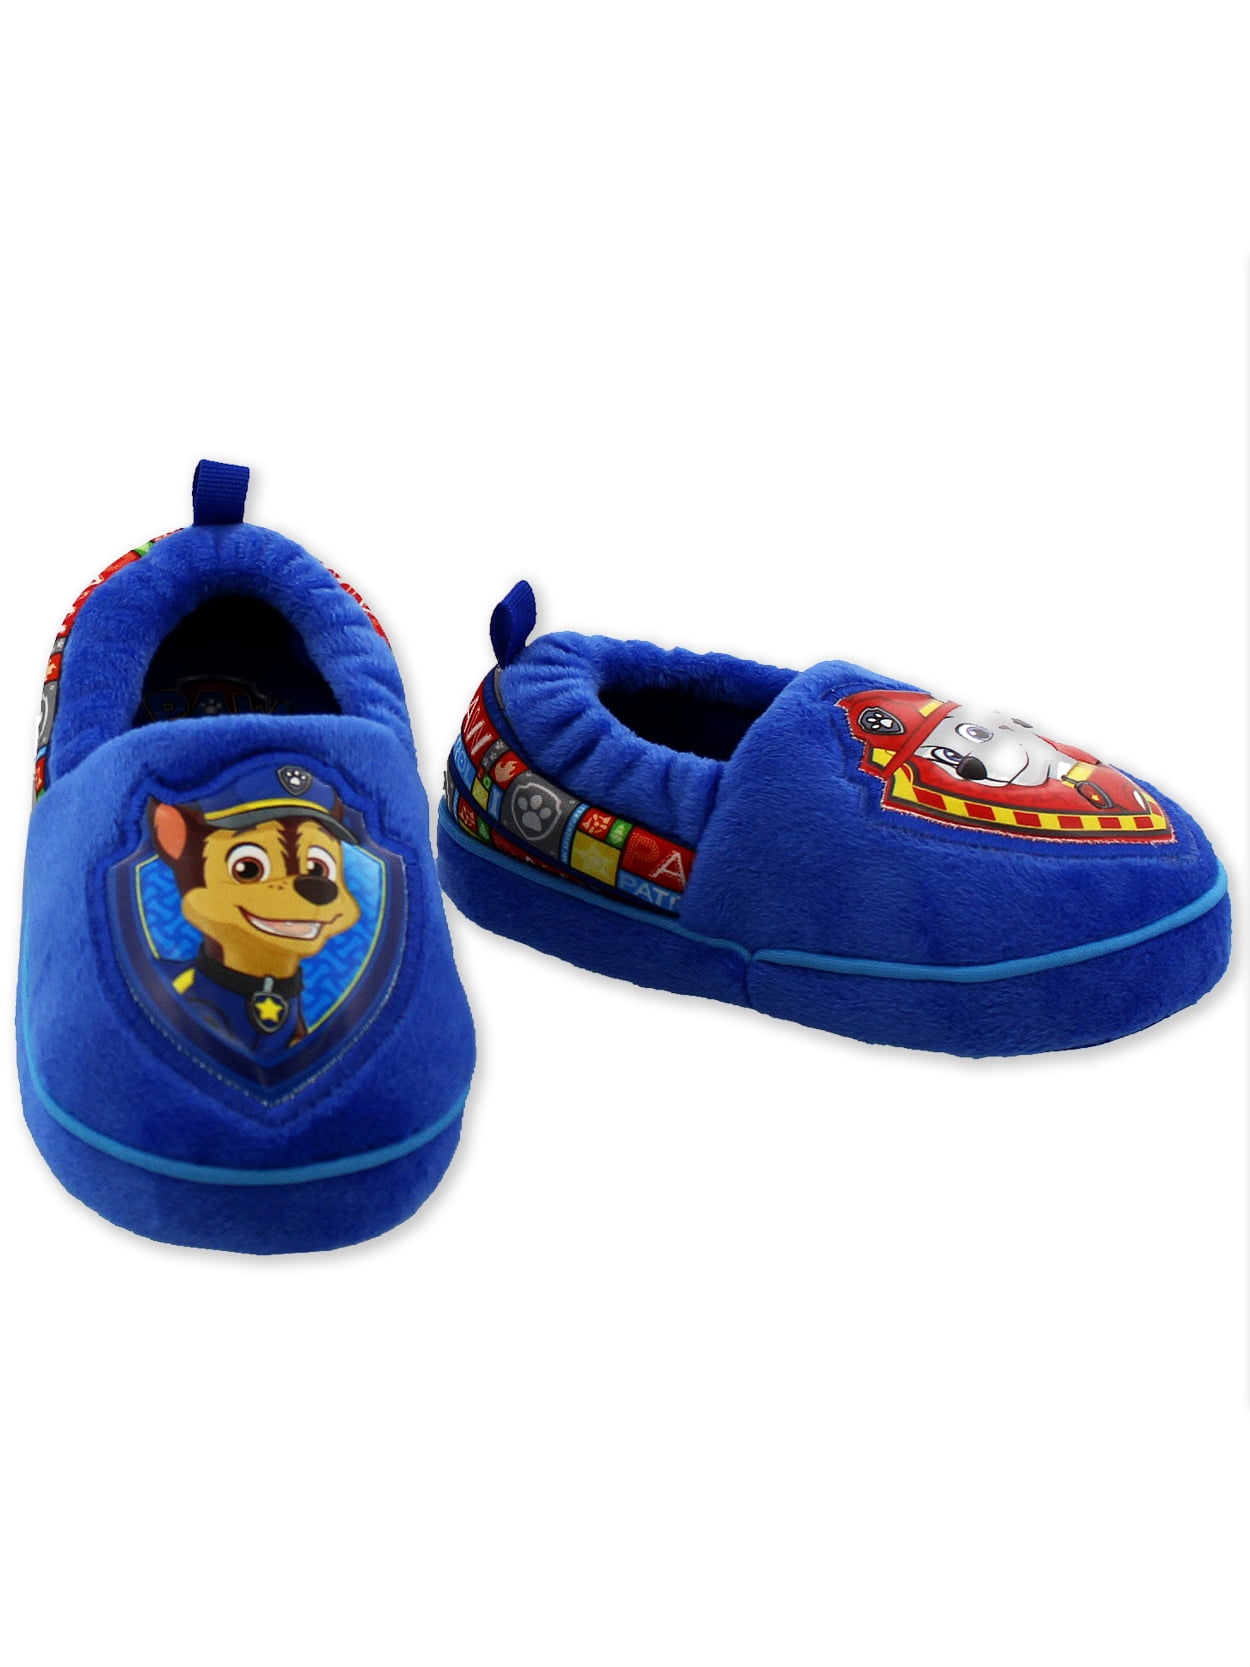 paw patrol slippers